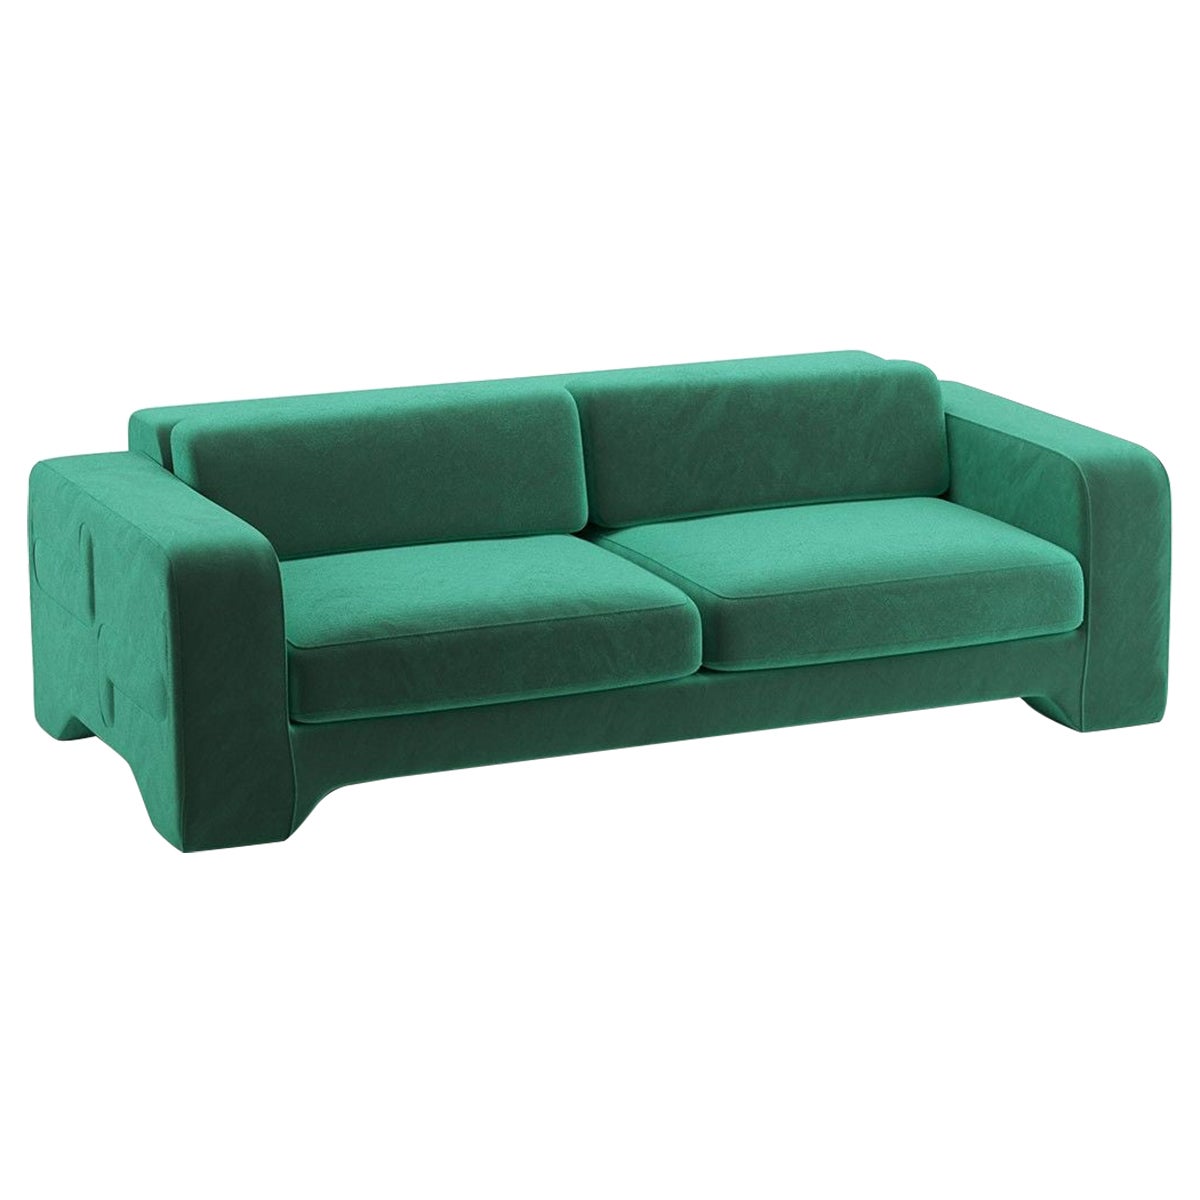 Popus Editions Giovanna 3 Seater Sofa in Green '772256' Como Velvet Upholstery